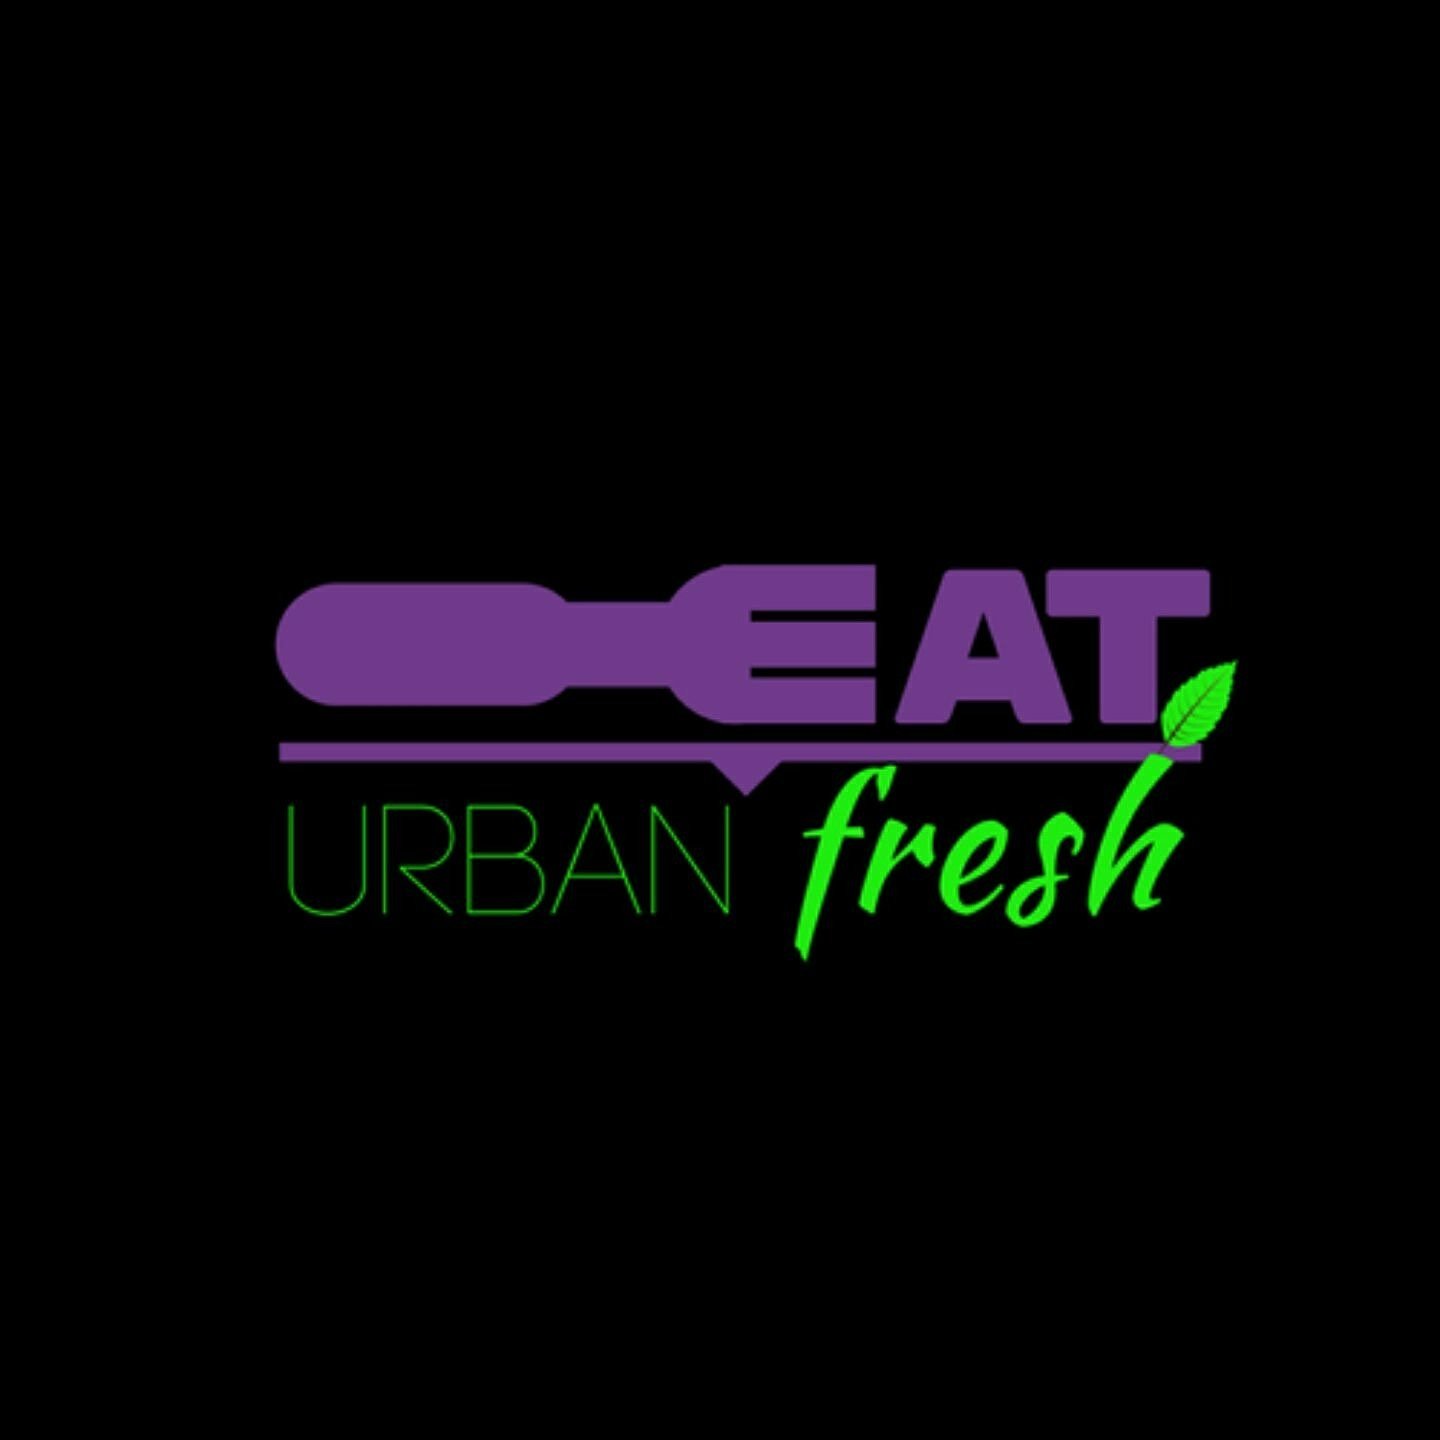 Eat Urban Fresh